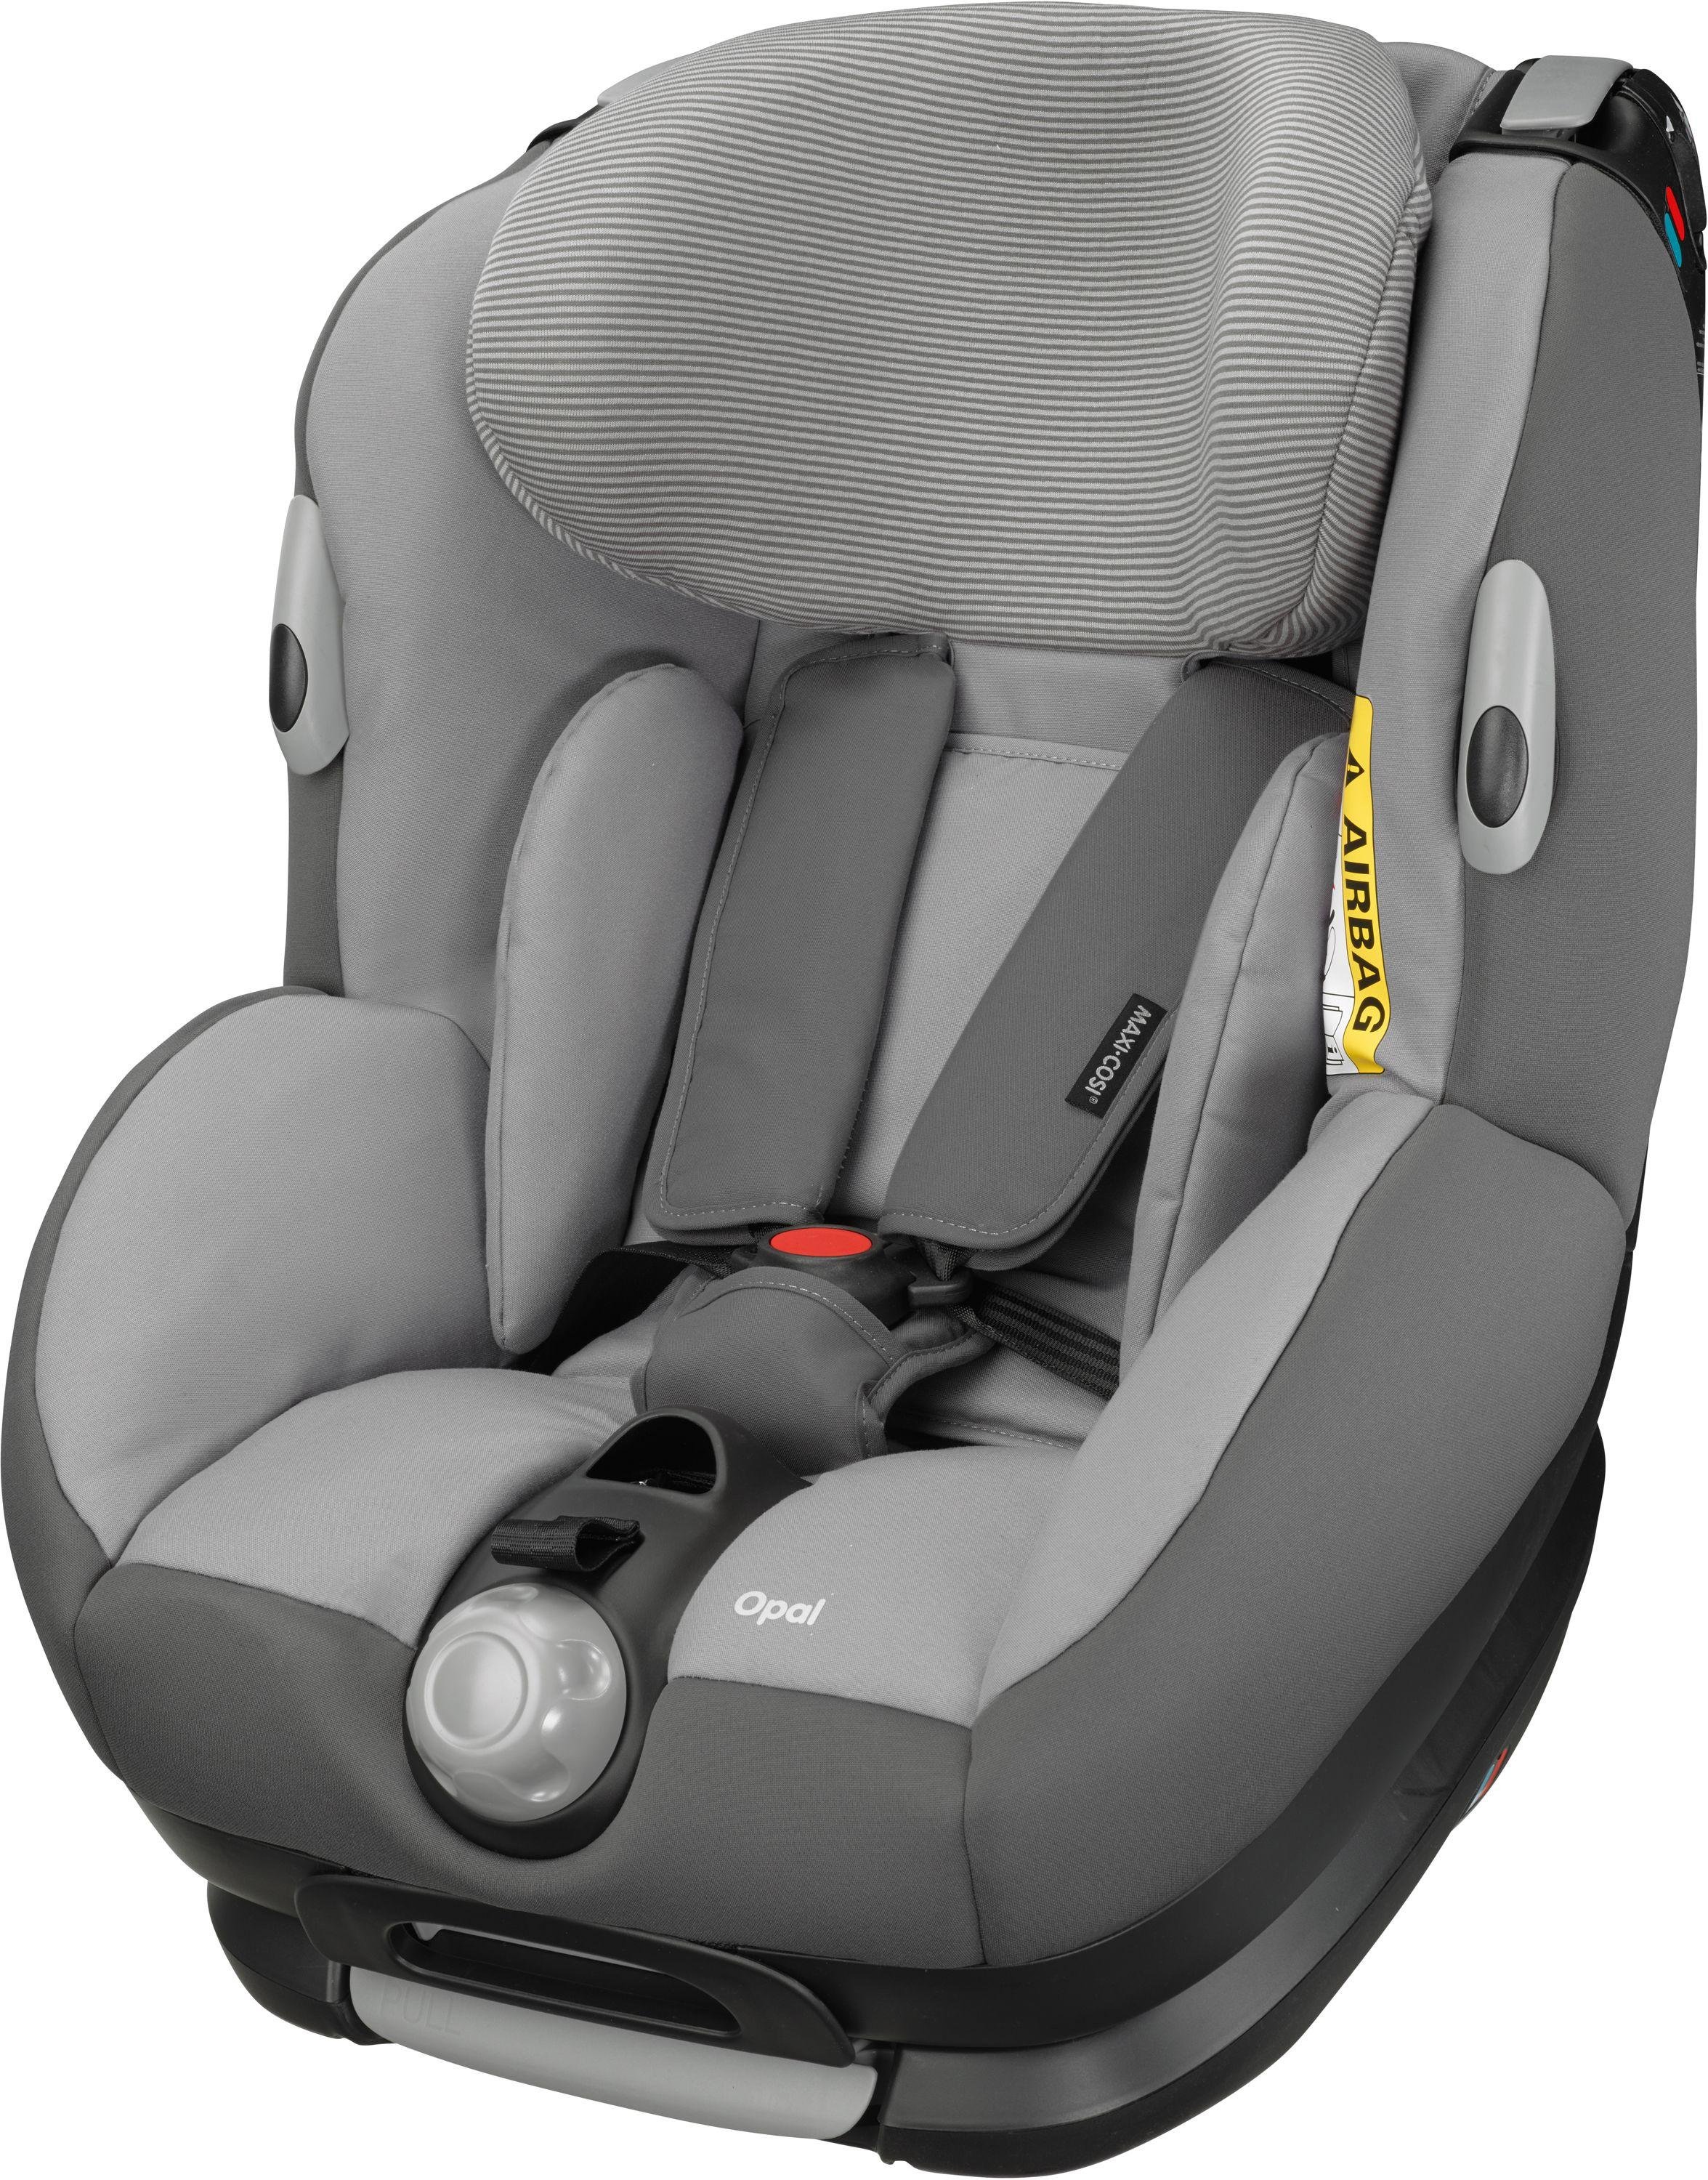 Maxi-Cosi Opal Group 0+ Car Seat - Concrete Grey